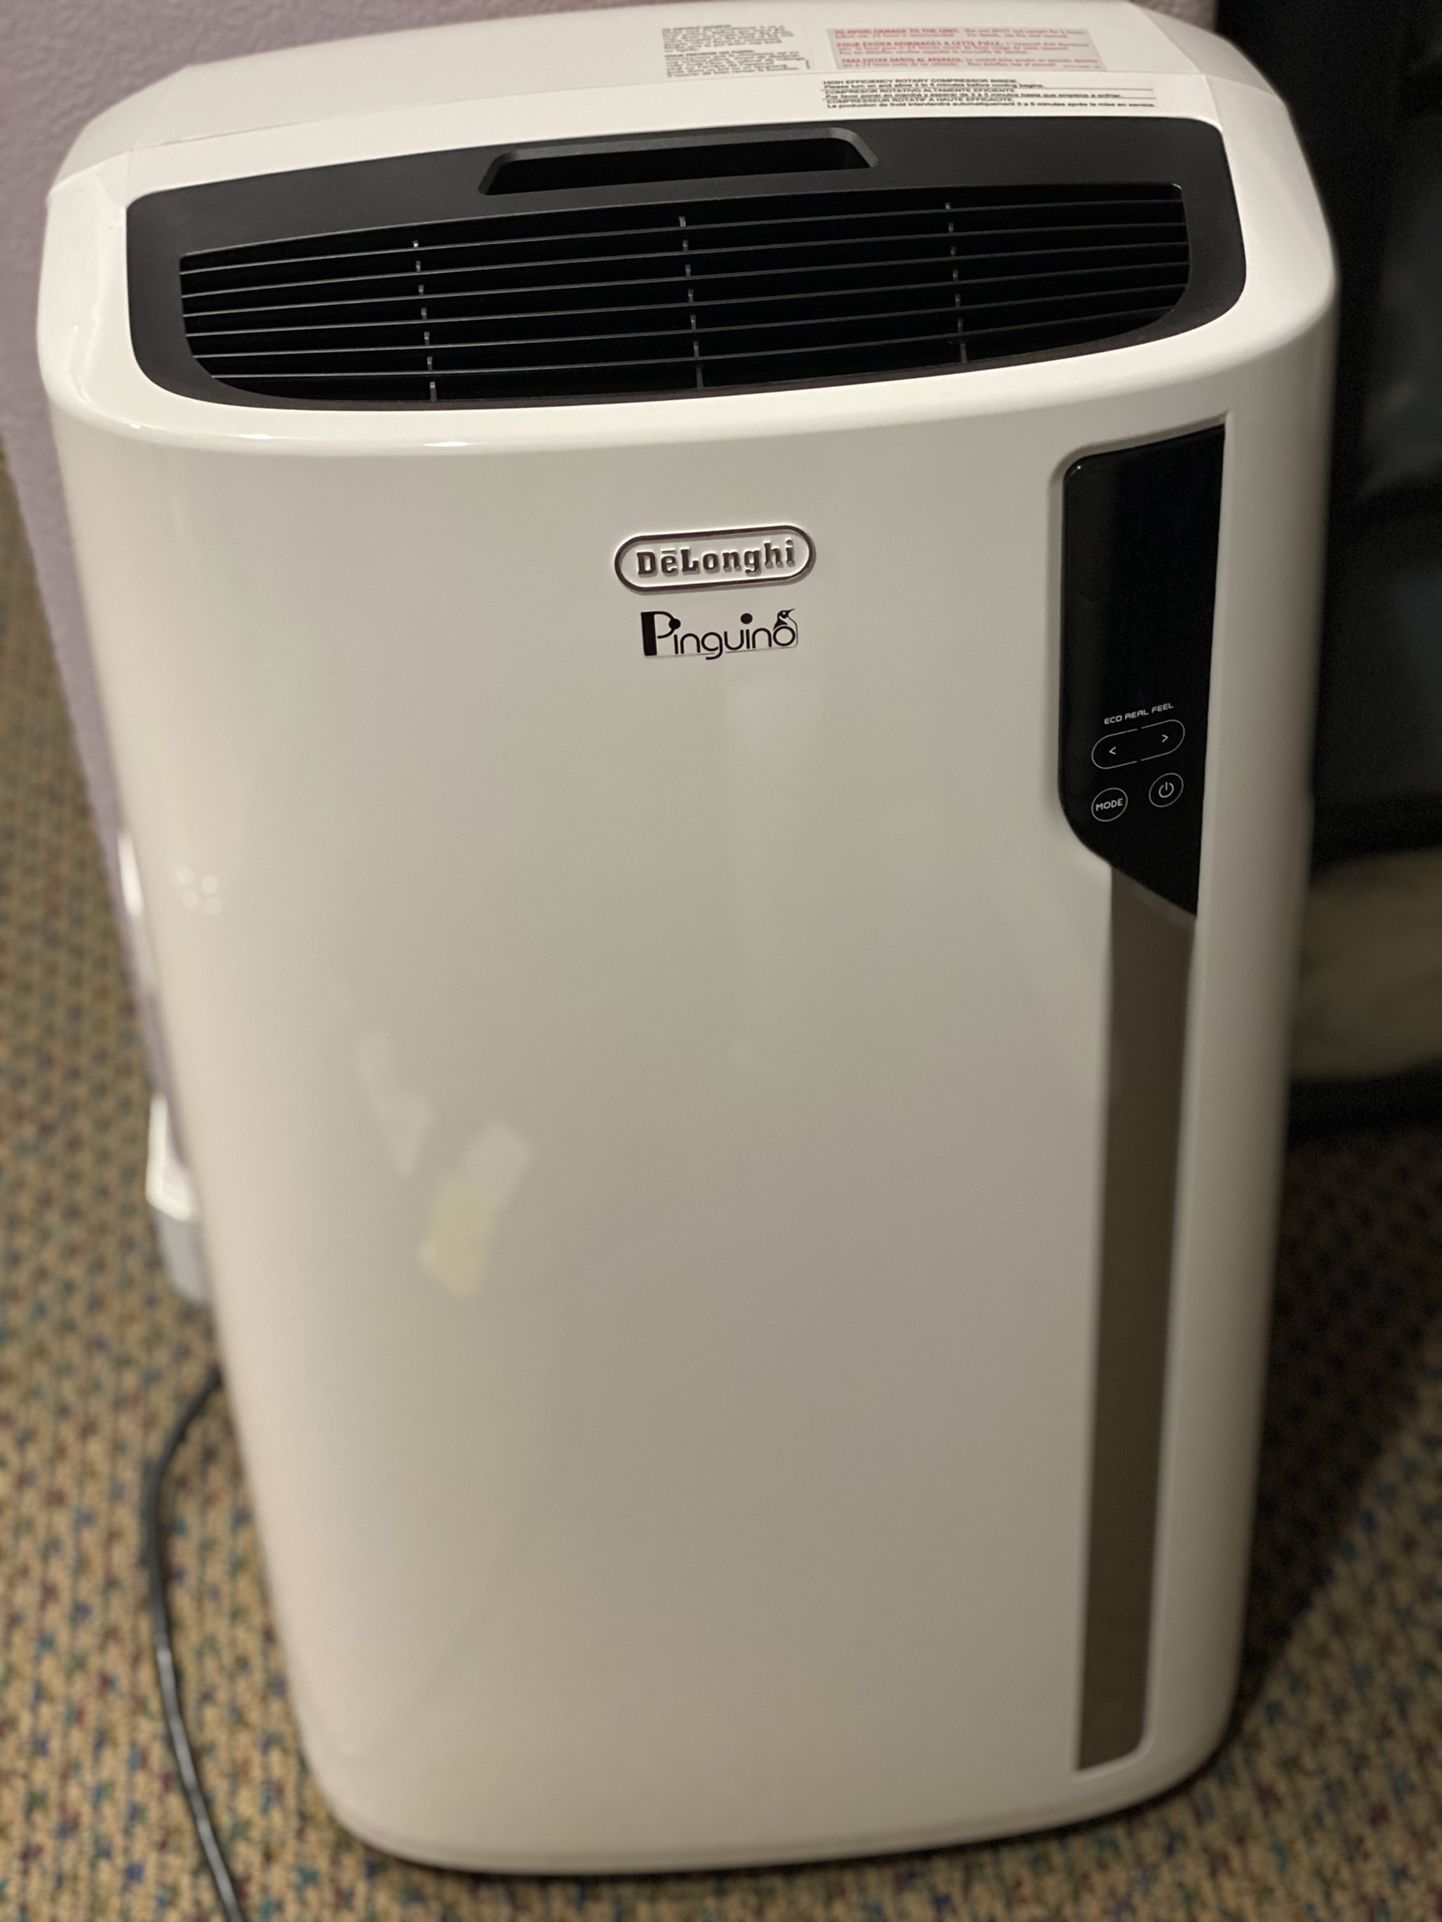 De’Longhi Pinguino Air Conditioner, Heater, Dehumifier And Fan